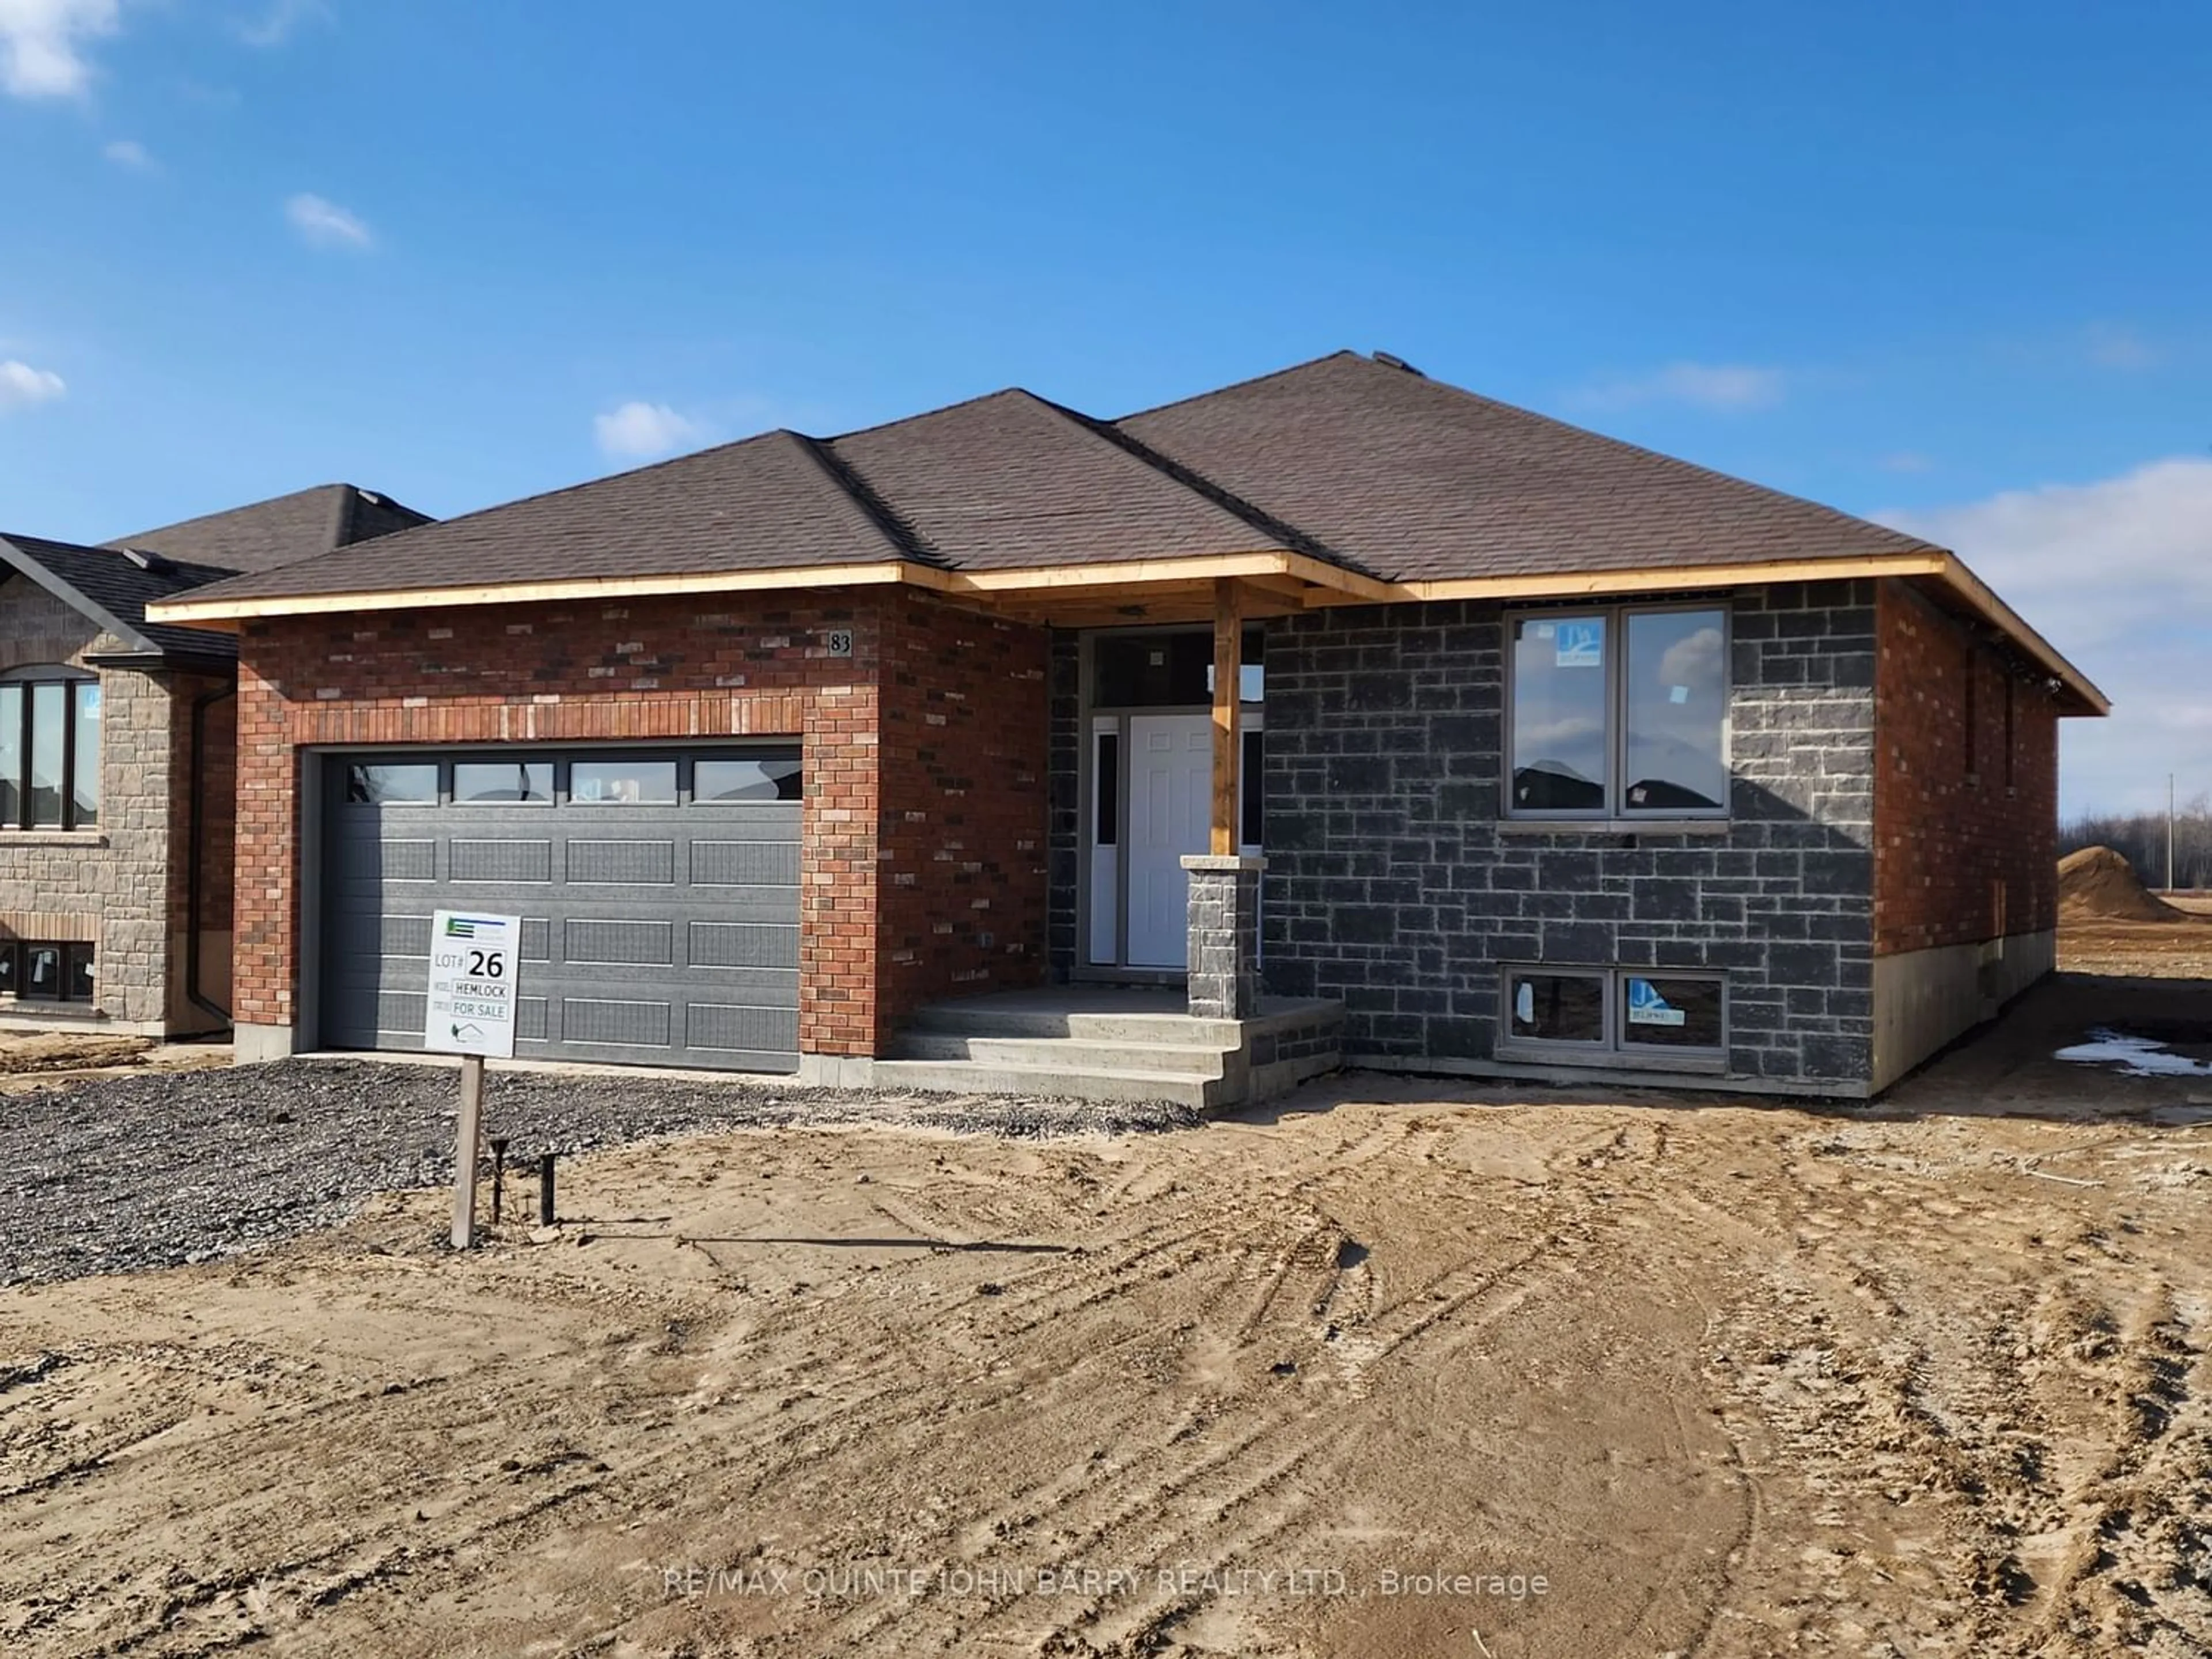 Home with brick exterior material for 83 Hillside Meadow Dr #26, Quinte West Ontario K8V 0J5